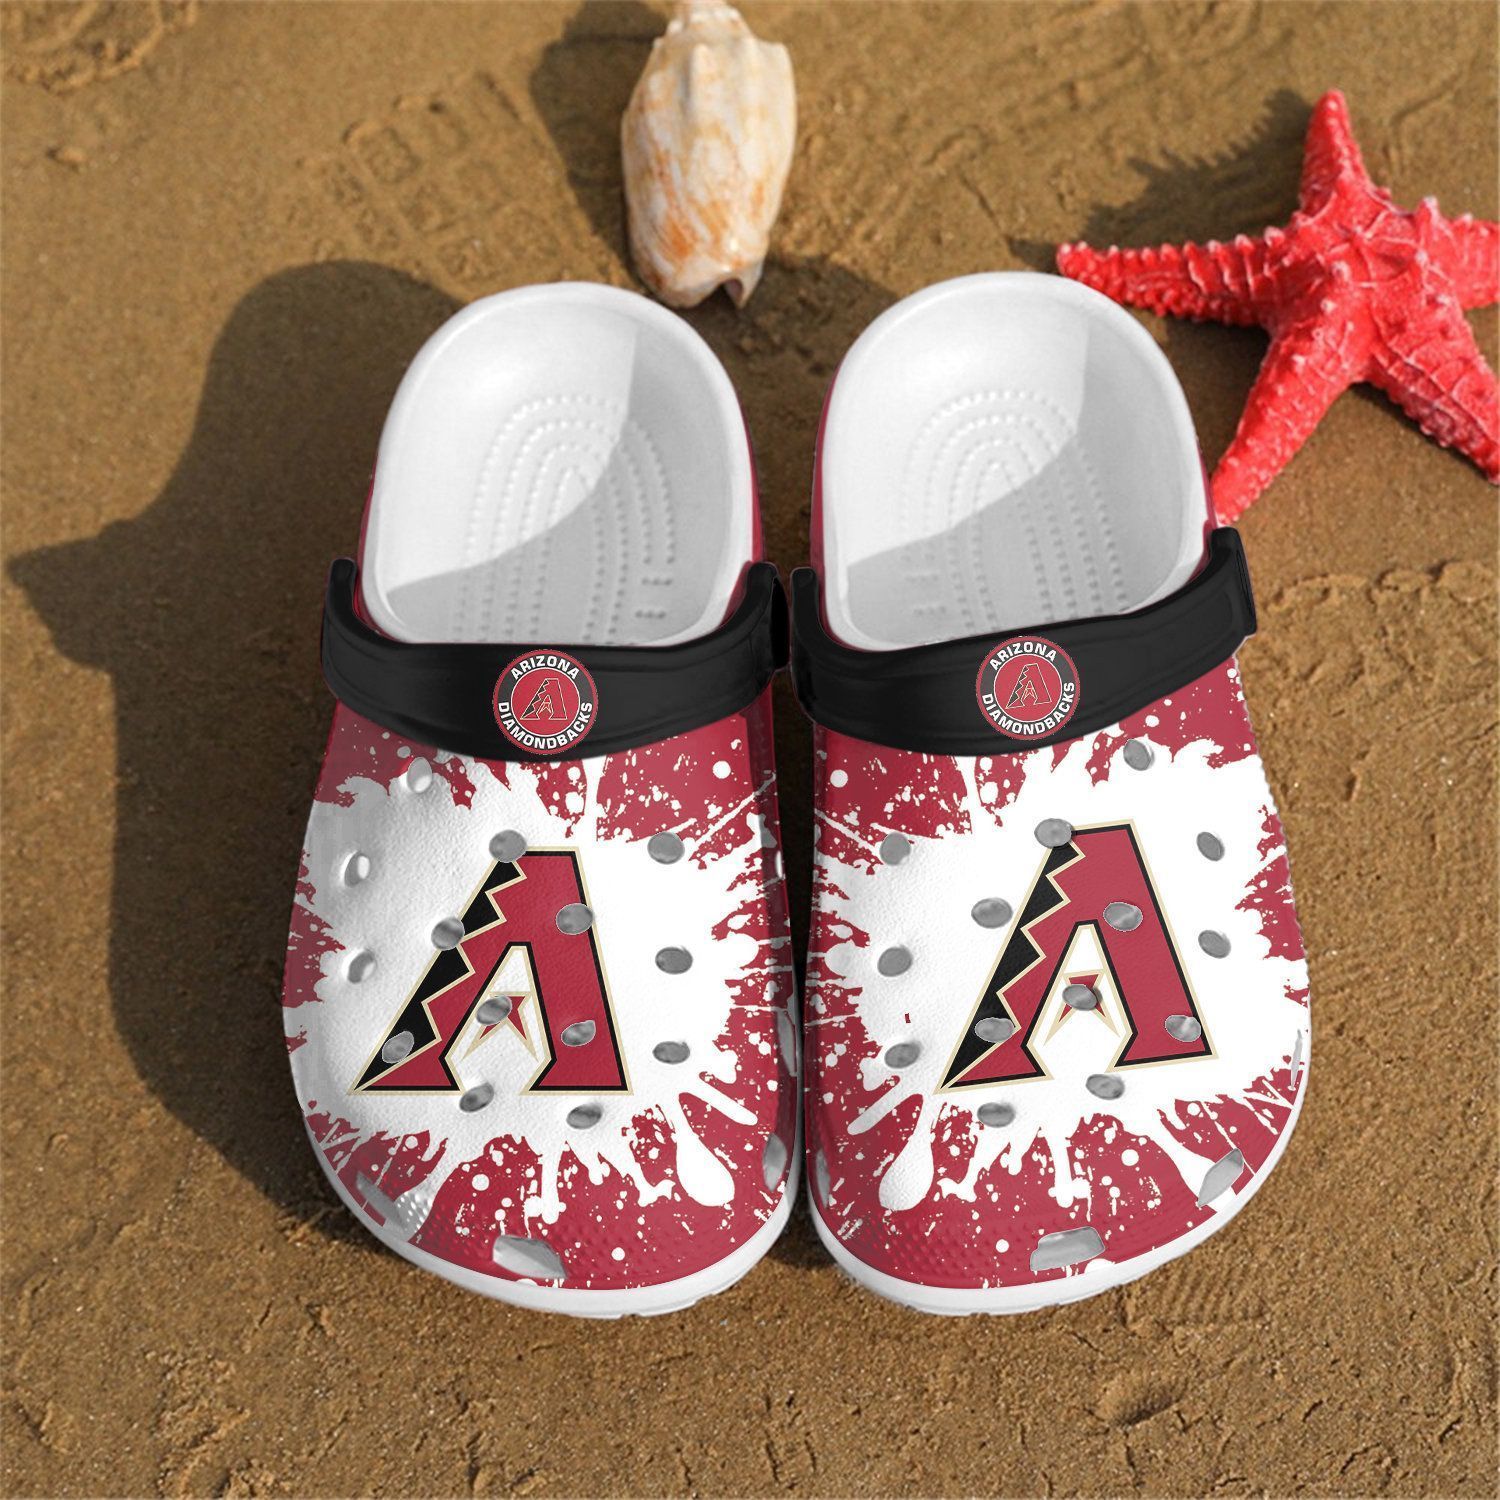 Arizona Diamondbacks Mlb Gift For Fan Crocs Crocband Clogs Comfy Footwear Tl97 - Yourtshirtman MLB Collection